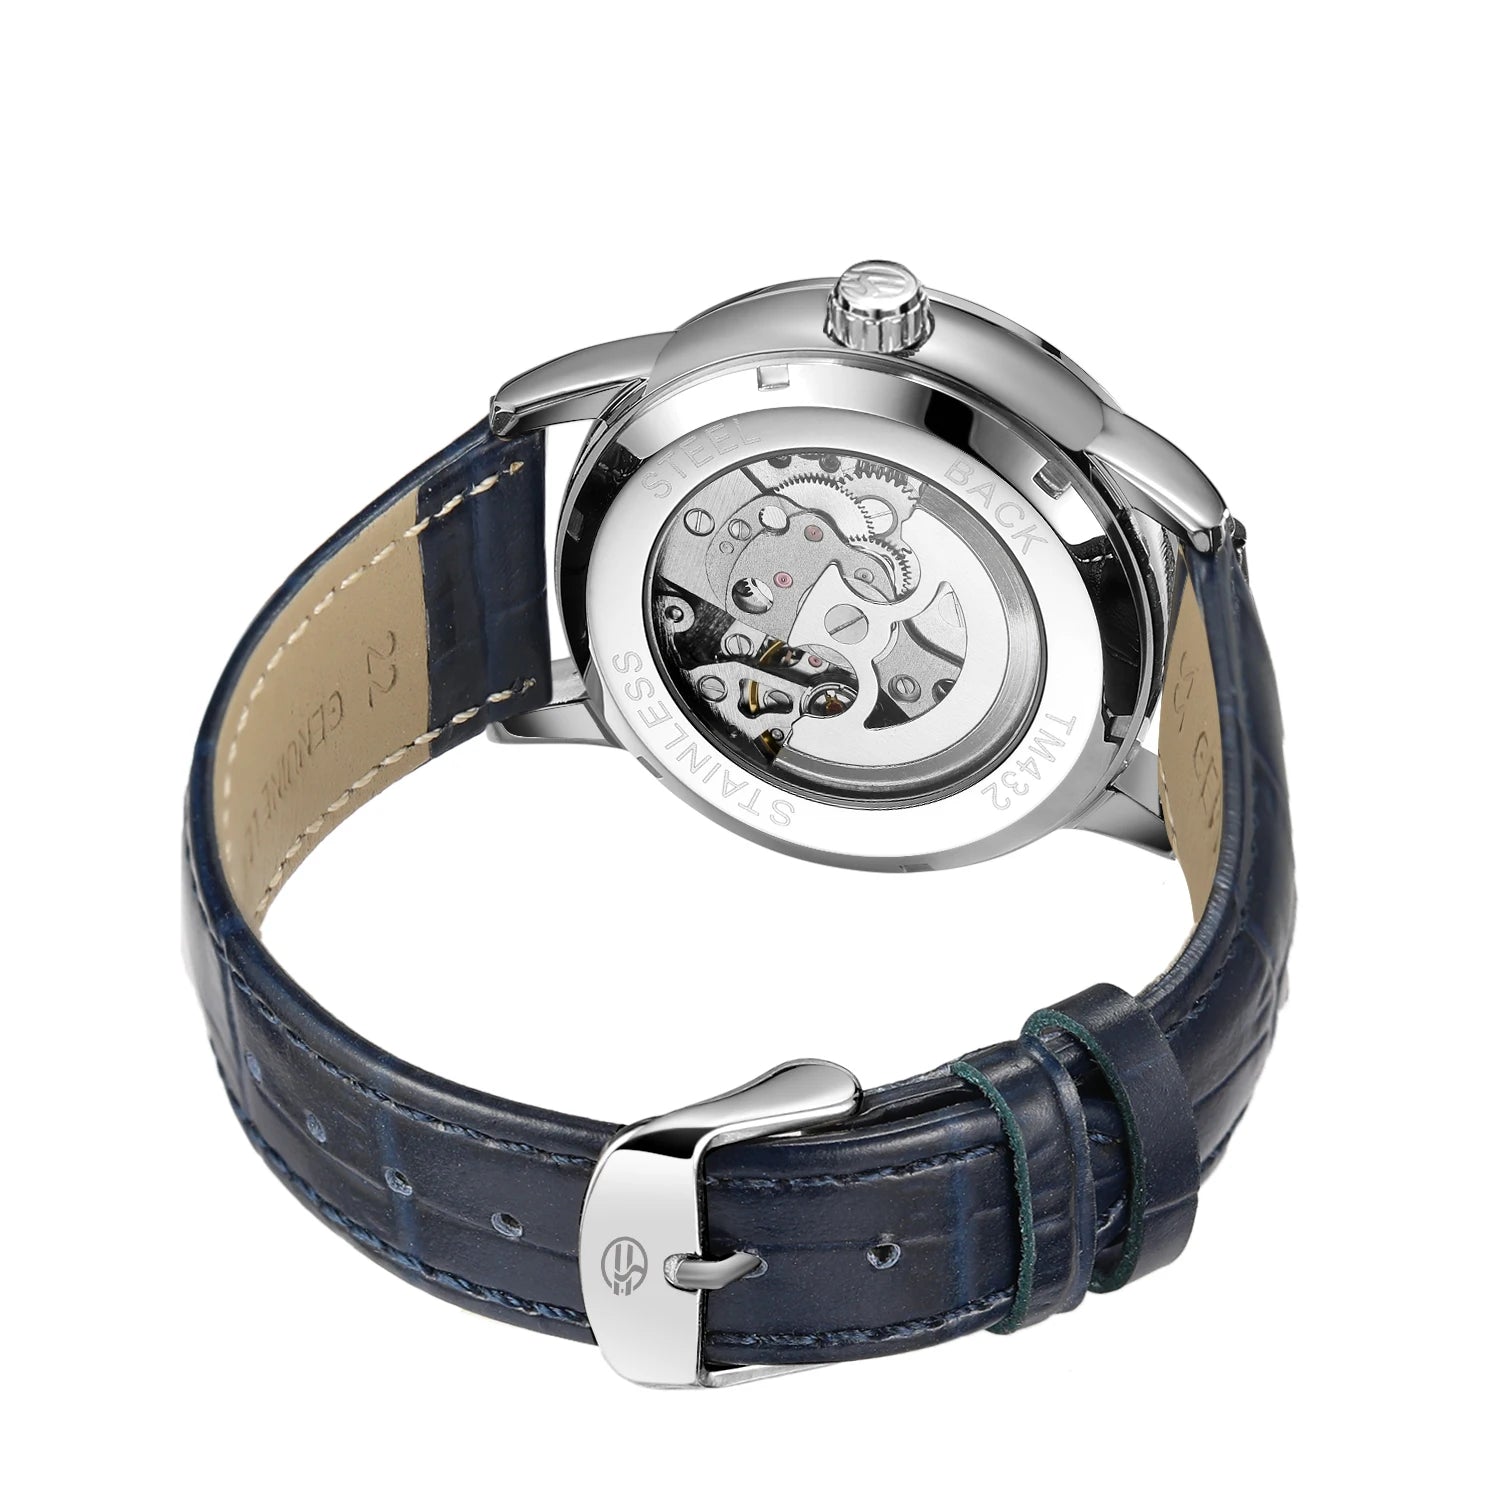 Forsining 432E New Original Automatic Mechanical Watch For Men Luxury Diamond Rotational Starry Sky Moon Phase Wristwatch